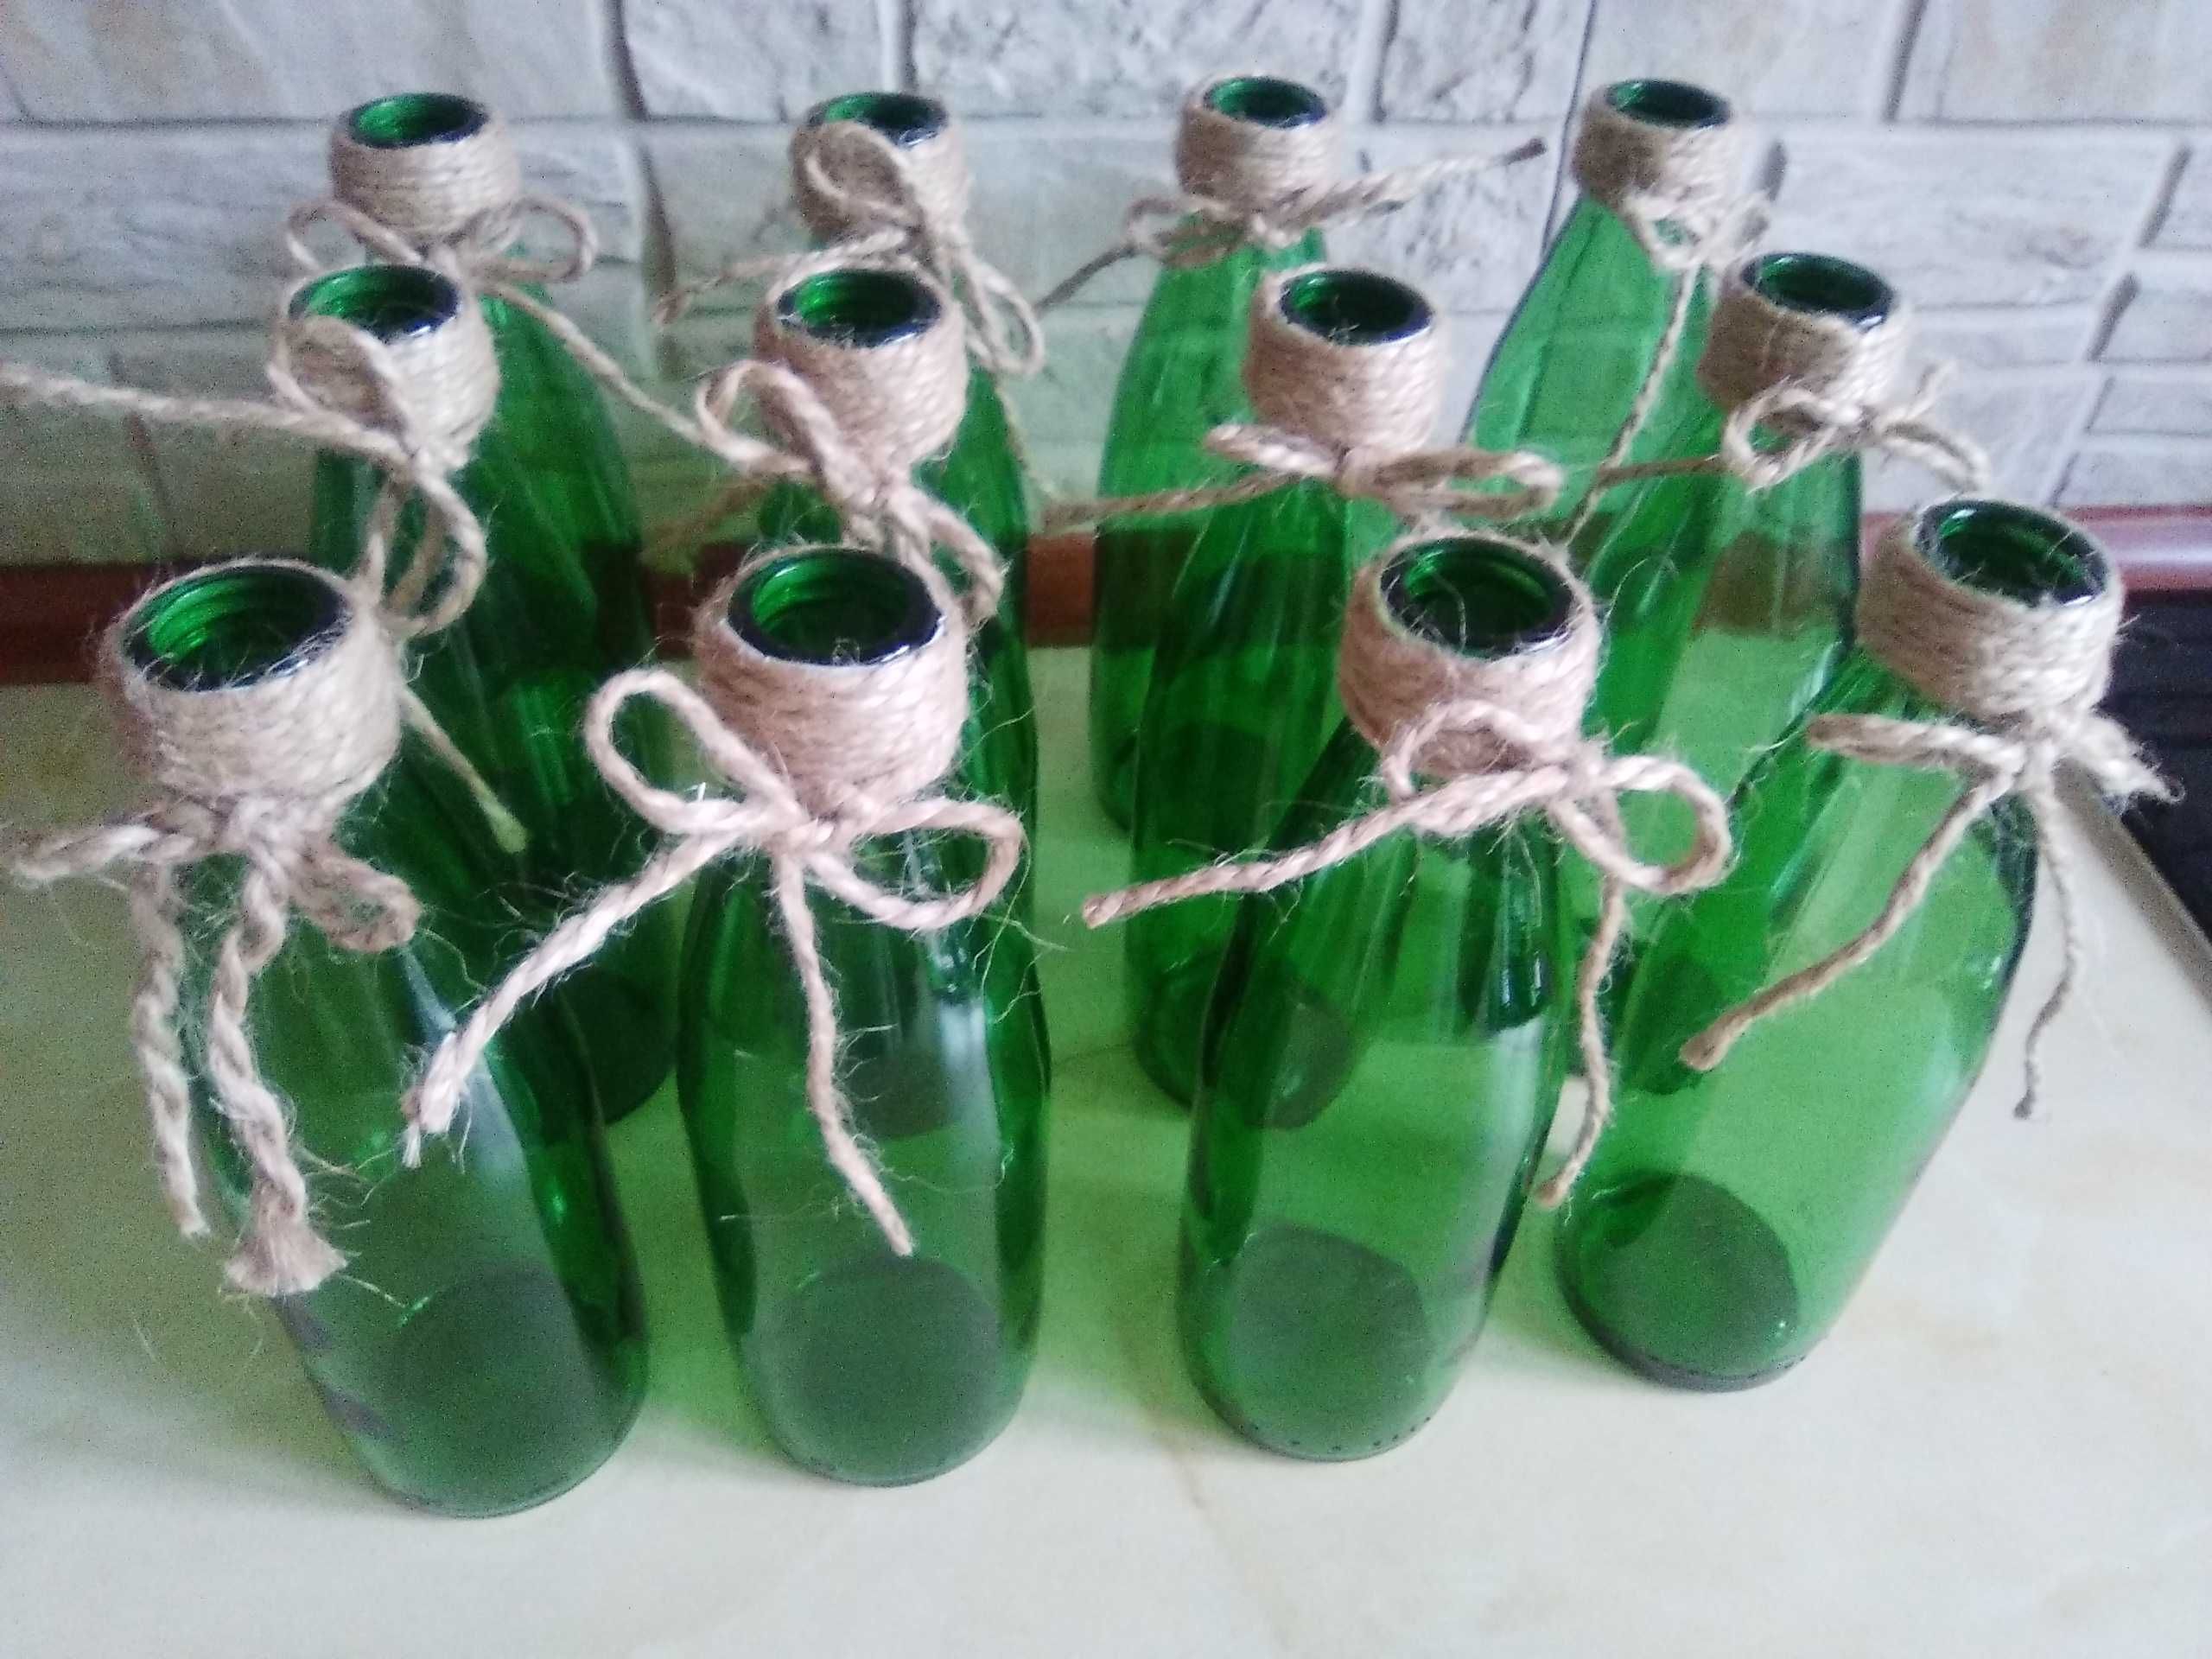 Butelki szklane zielone 250 ml 12szt